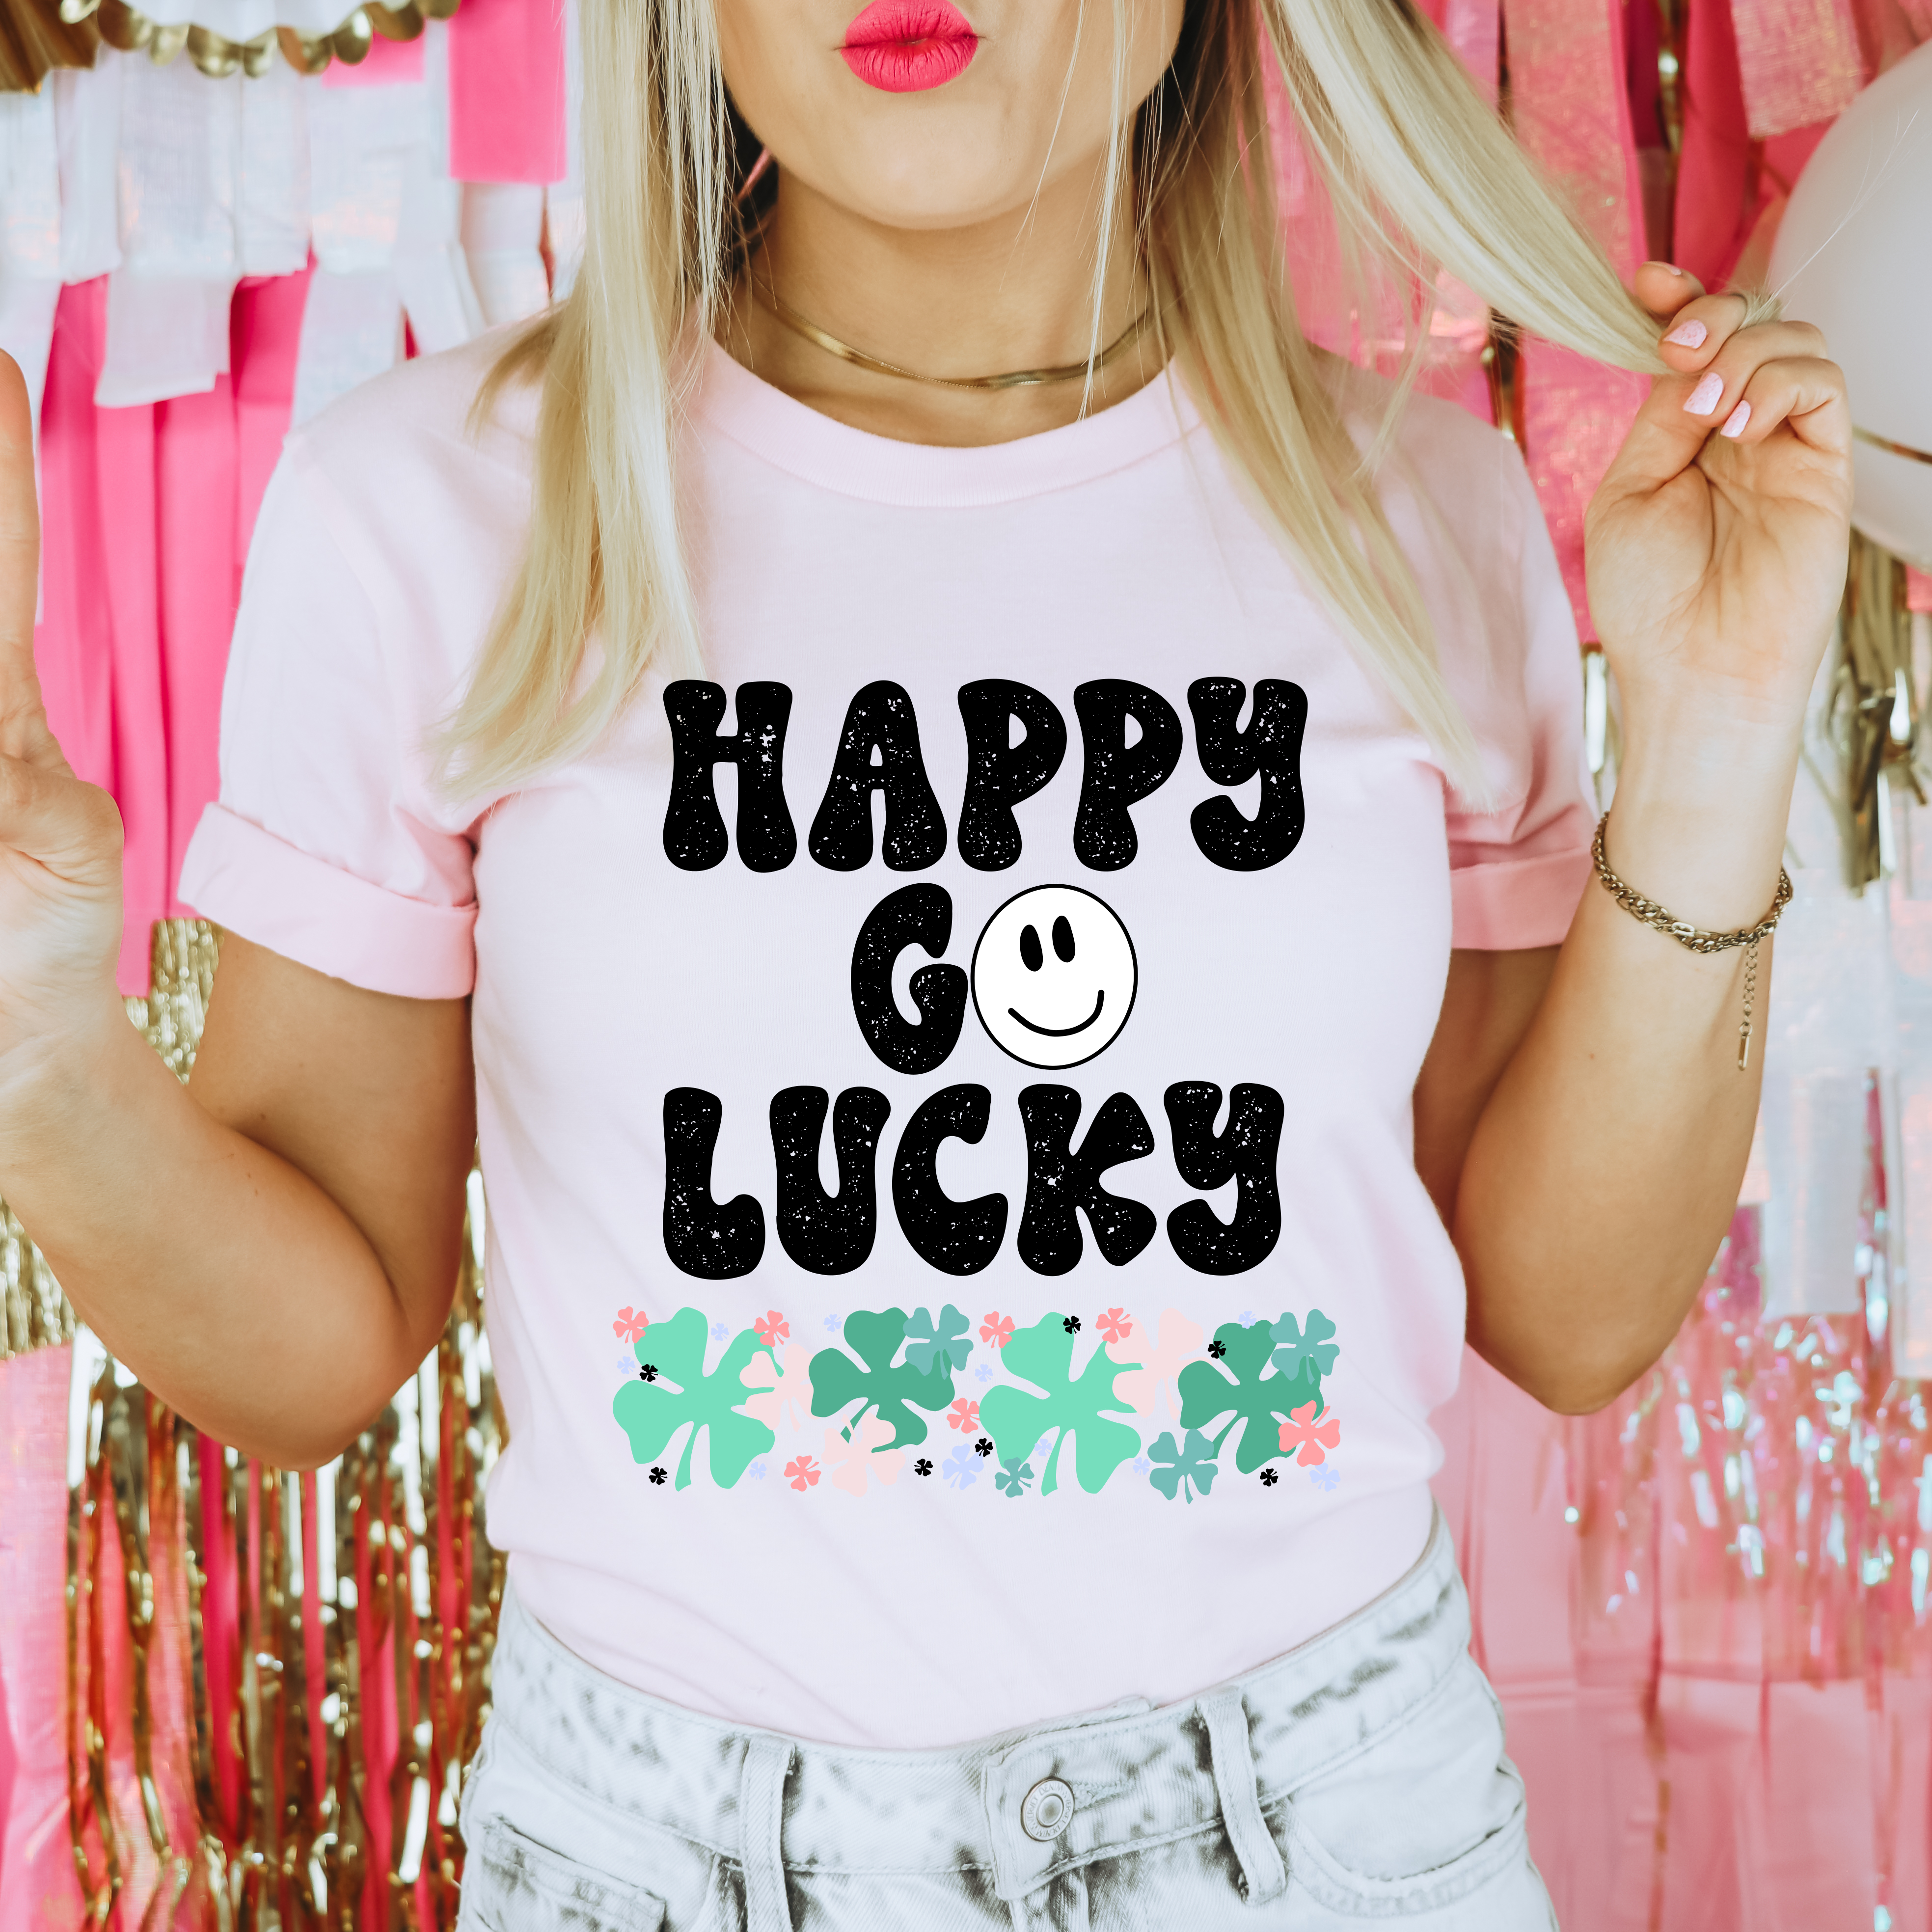 DIGITAL - Happy Go Lucky (6 Design Pack)